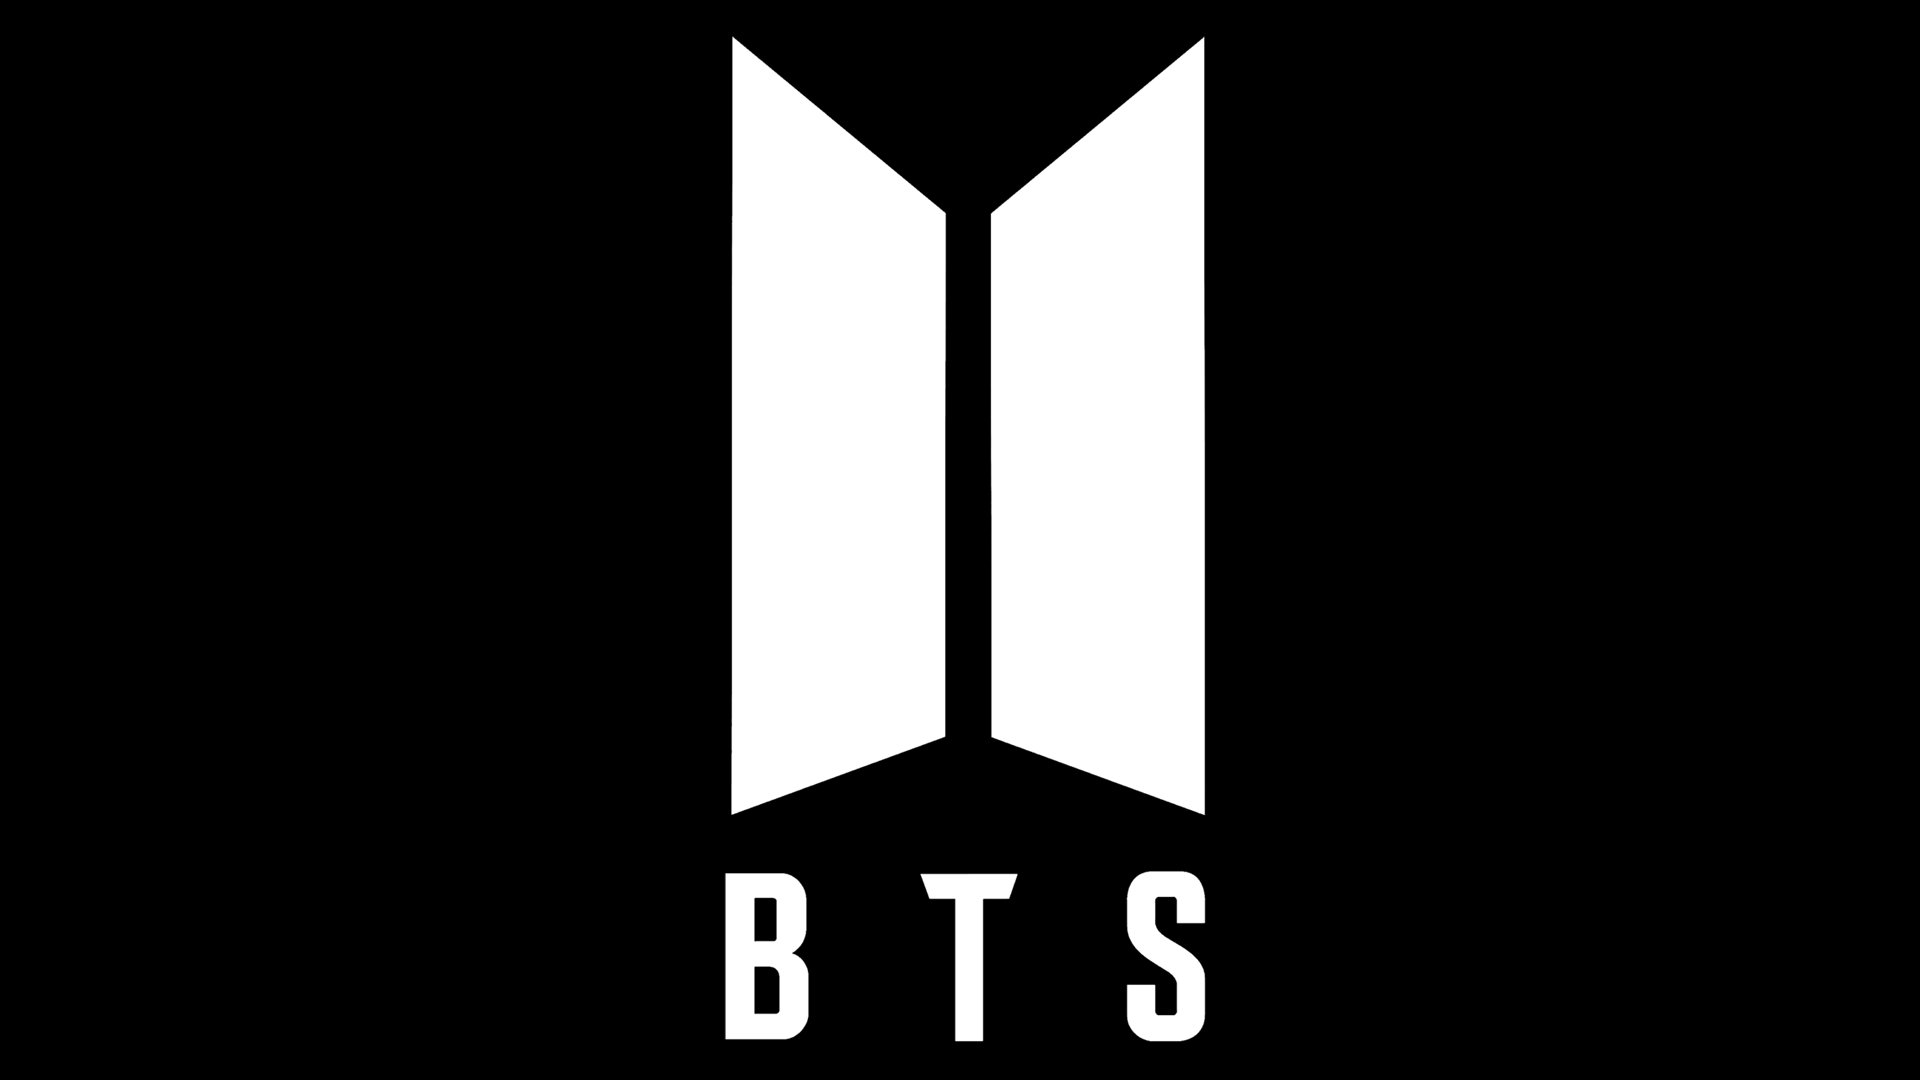 BTS Logo, BTS Symbol, Meaning, History and Evolution